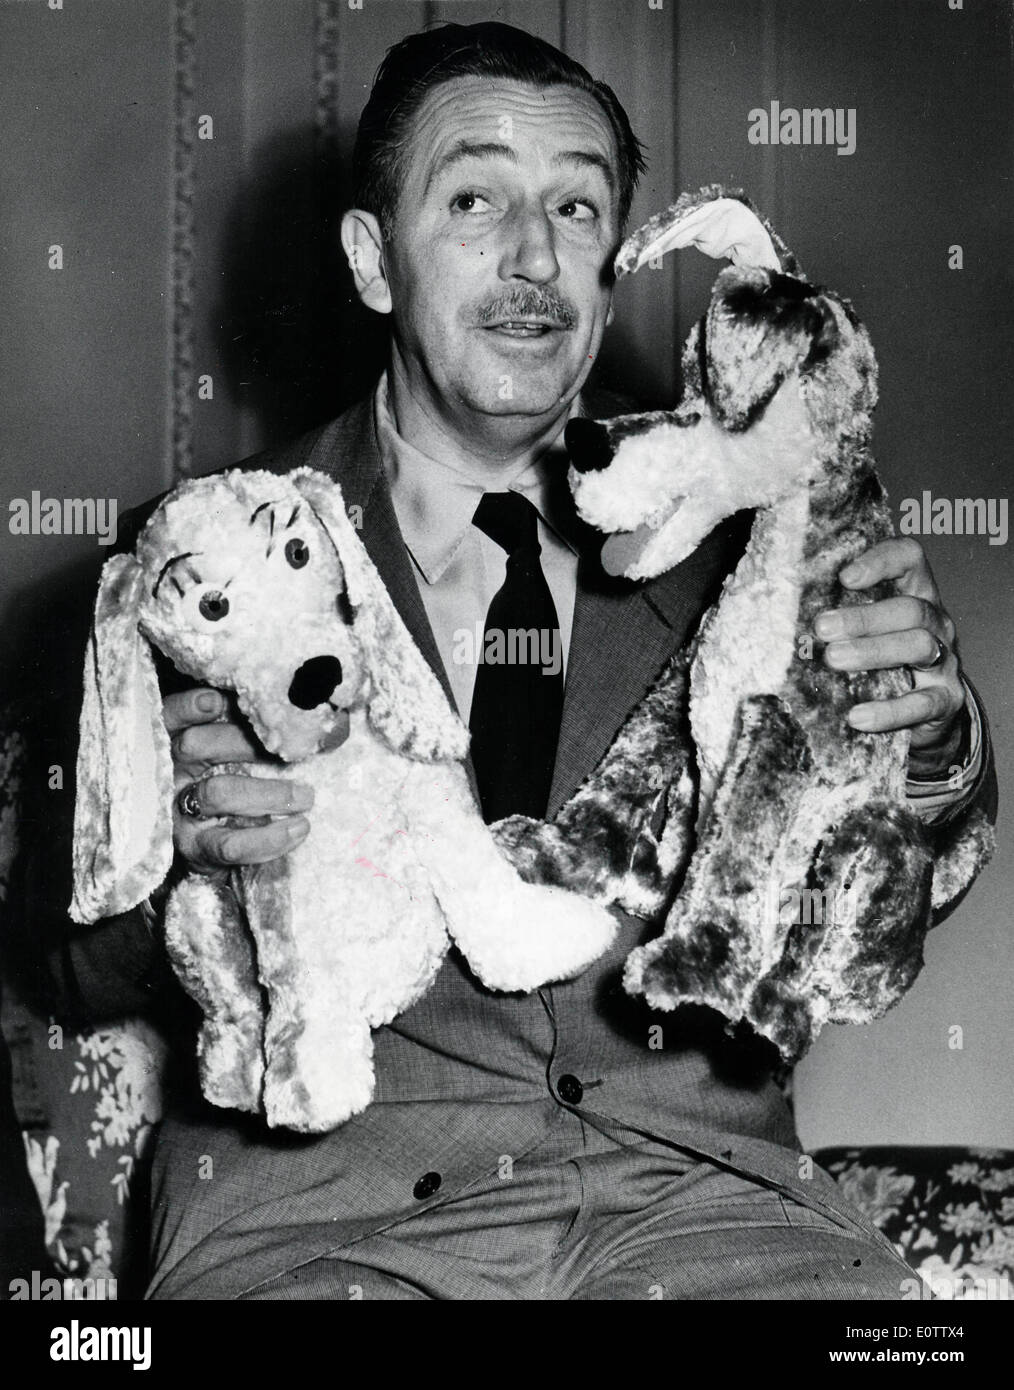 Walt Disney playing with stuffed animals Stock Photo